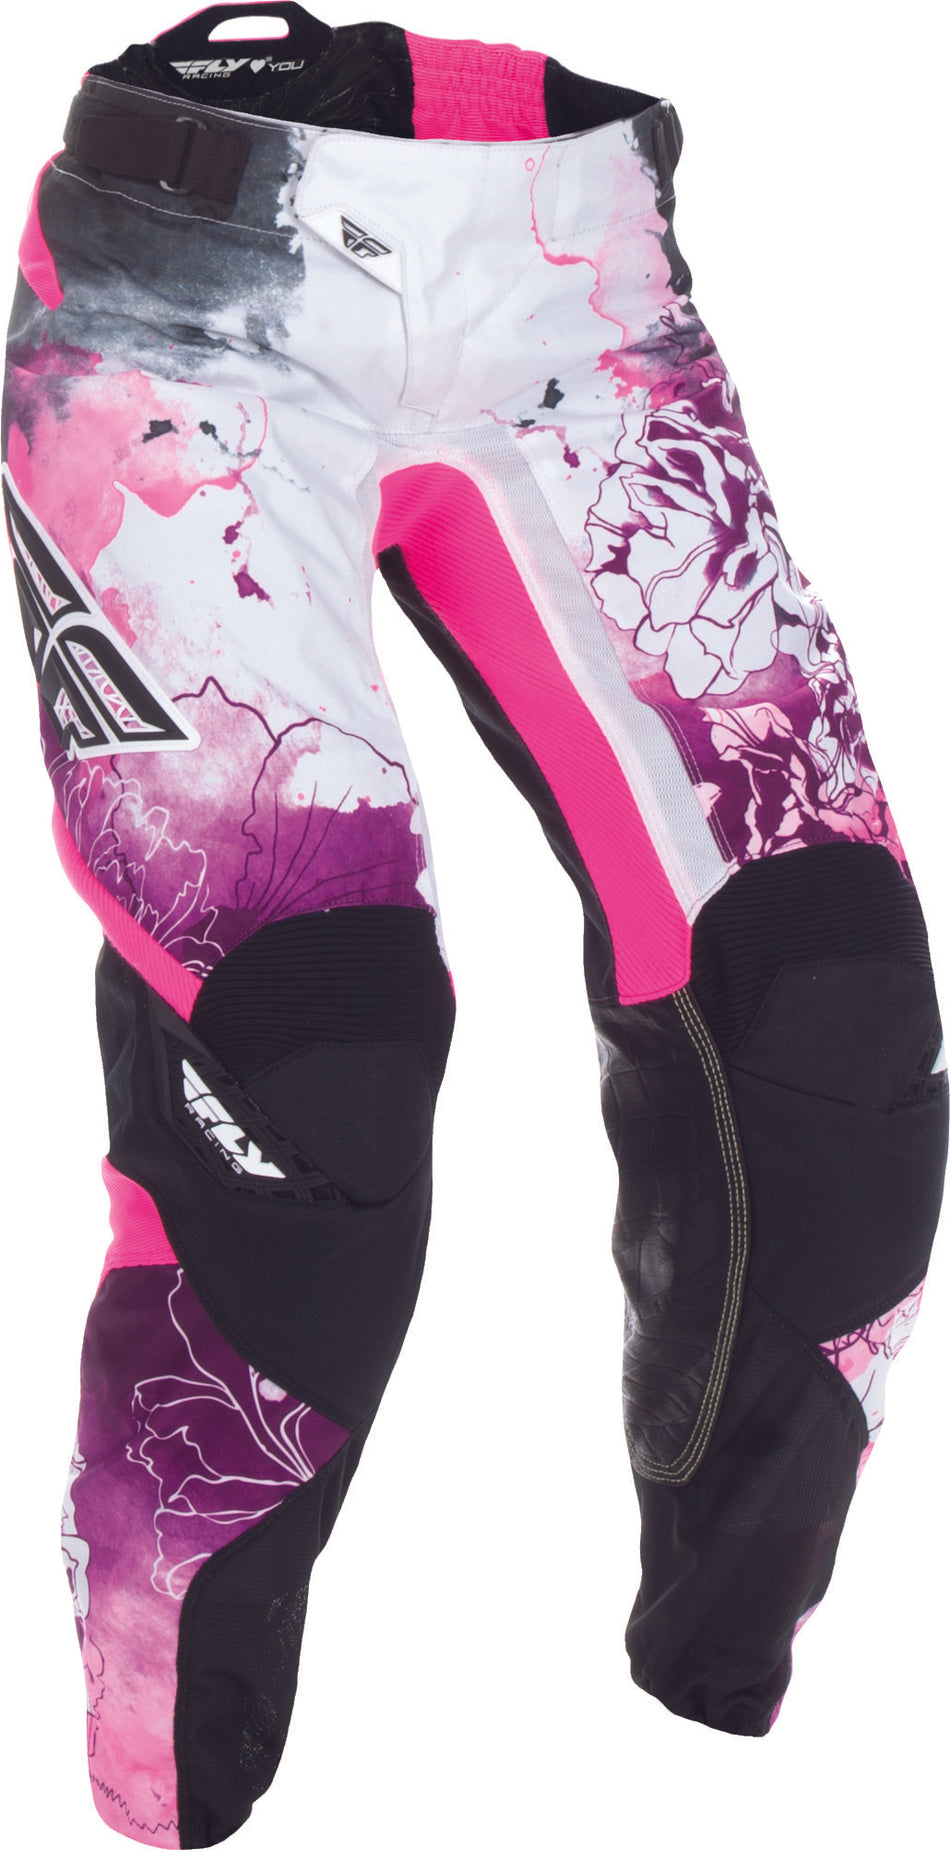 FLY RACING Kinetic Women's Race Pant Pink/Purple Sz 7/8 370-63207